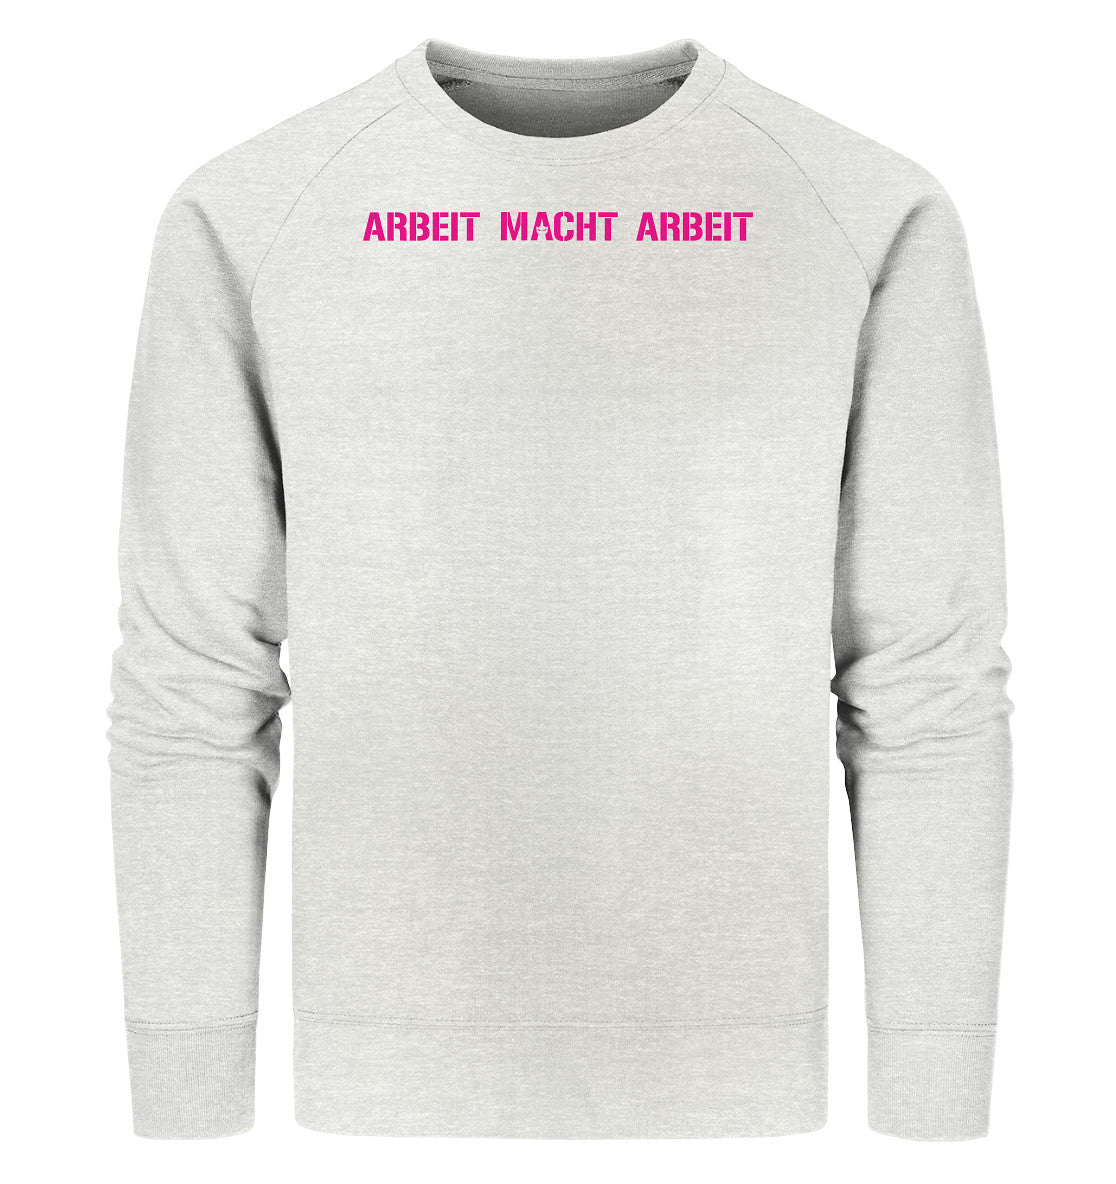 ARBEIT MACHT ARBEIT - Organic Sweatshirt